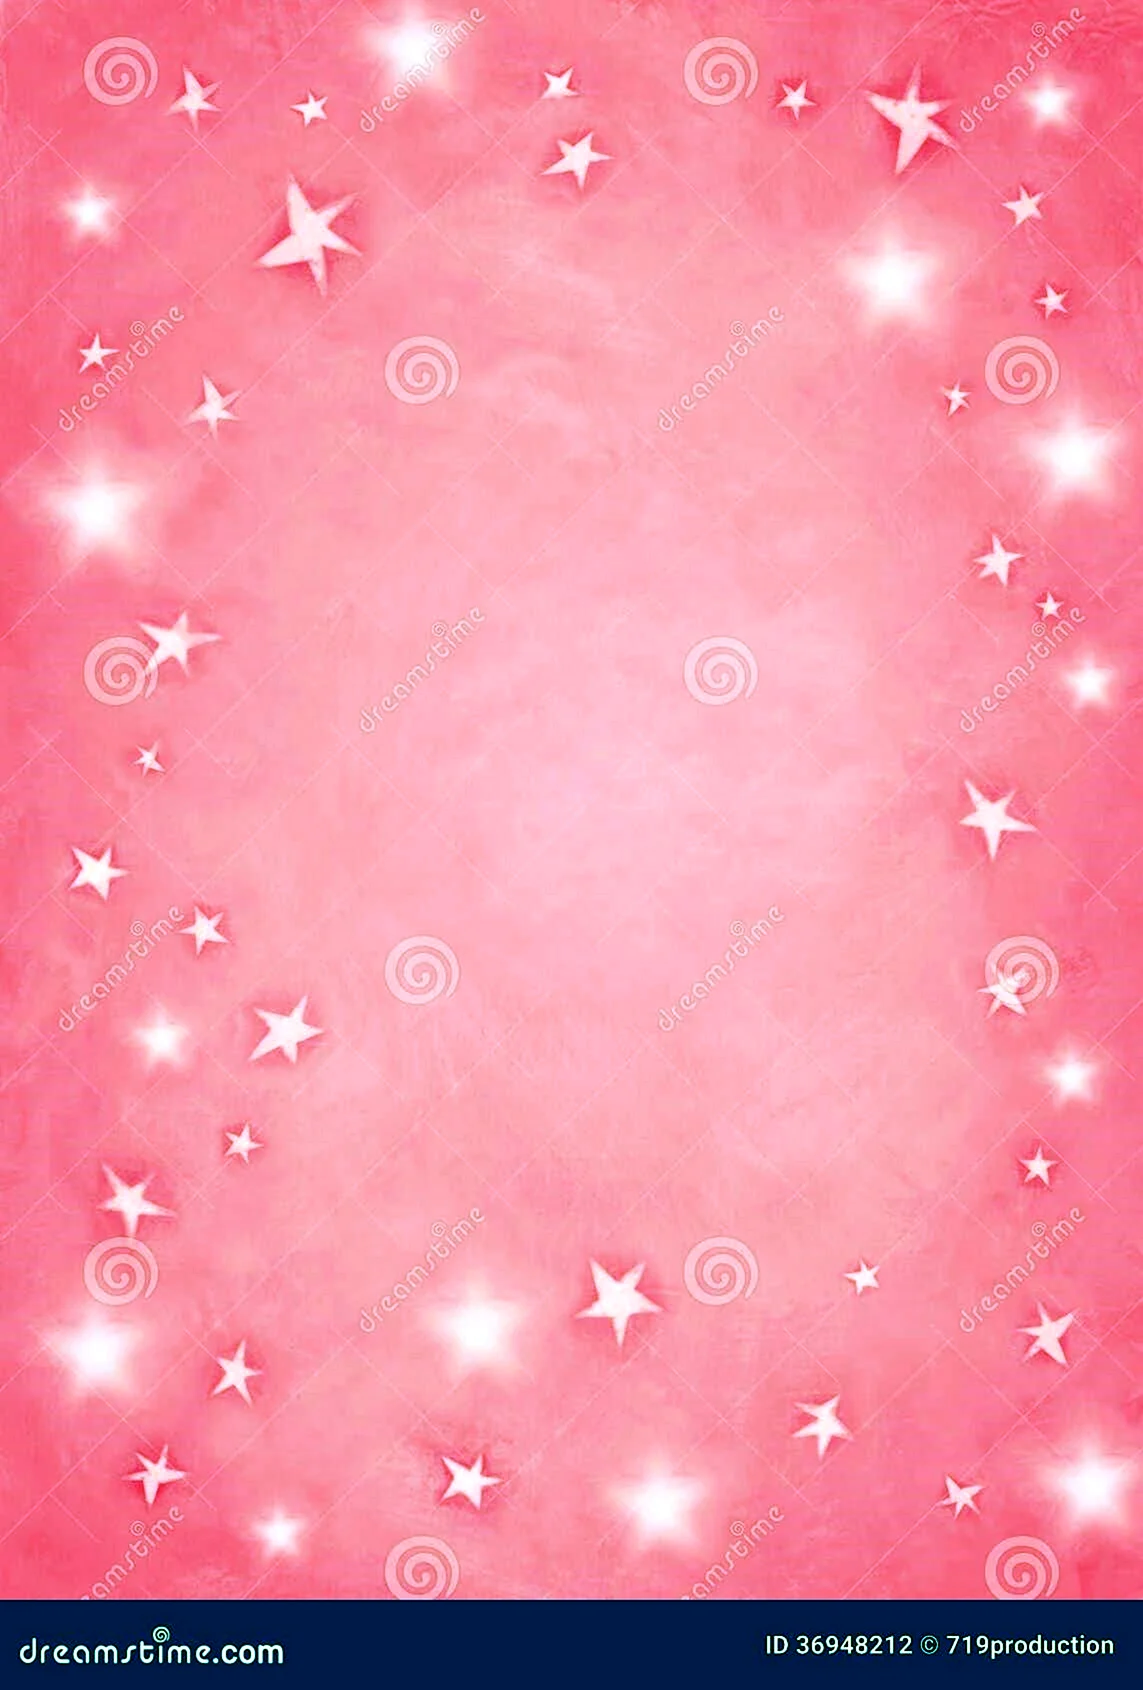 Фон для метрики розовый со звездами